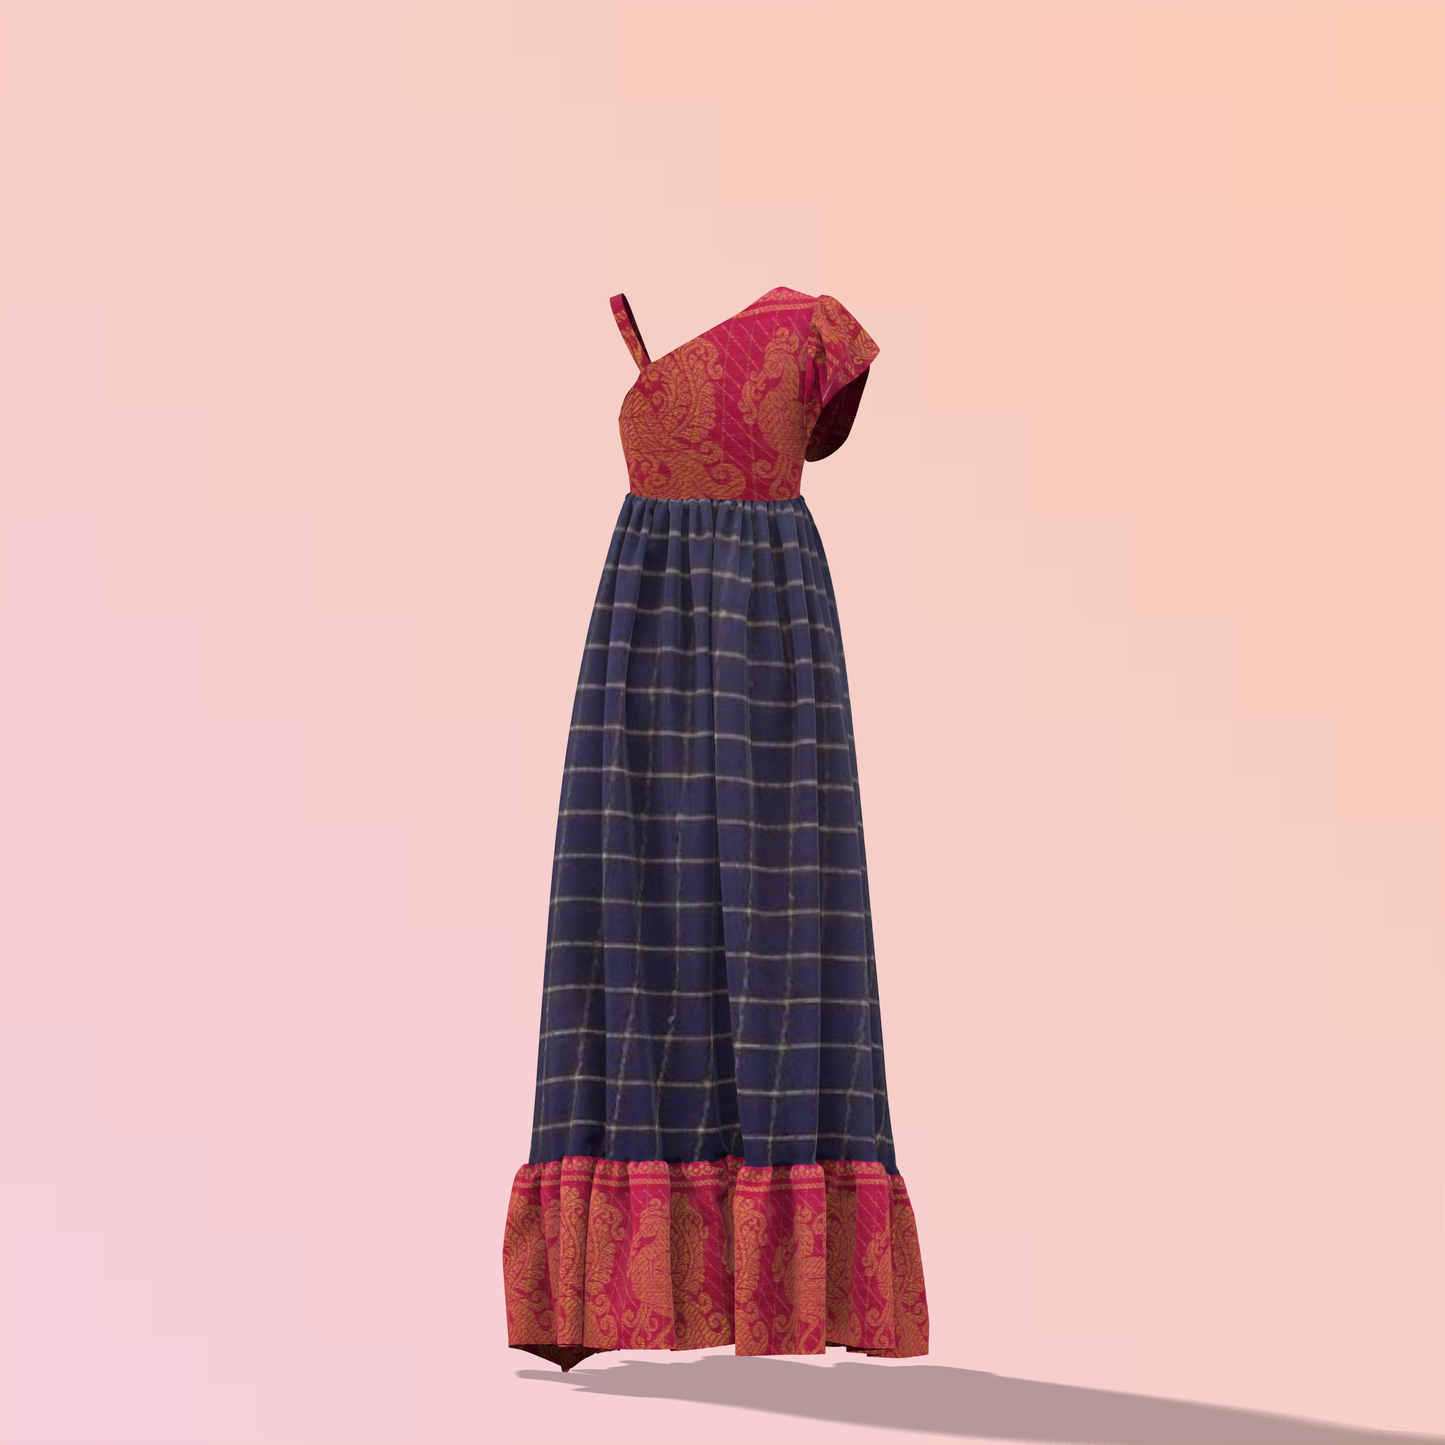 Regal Rhapsody Customized Dress - CDSS018 (Stitching Service)